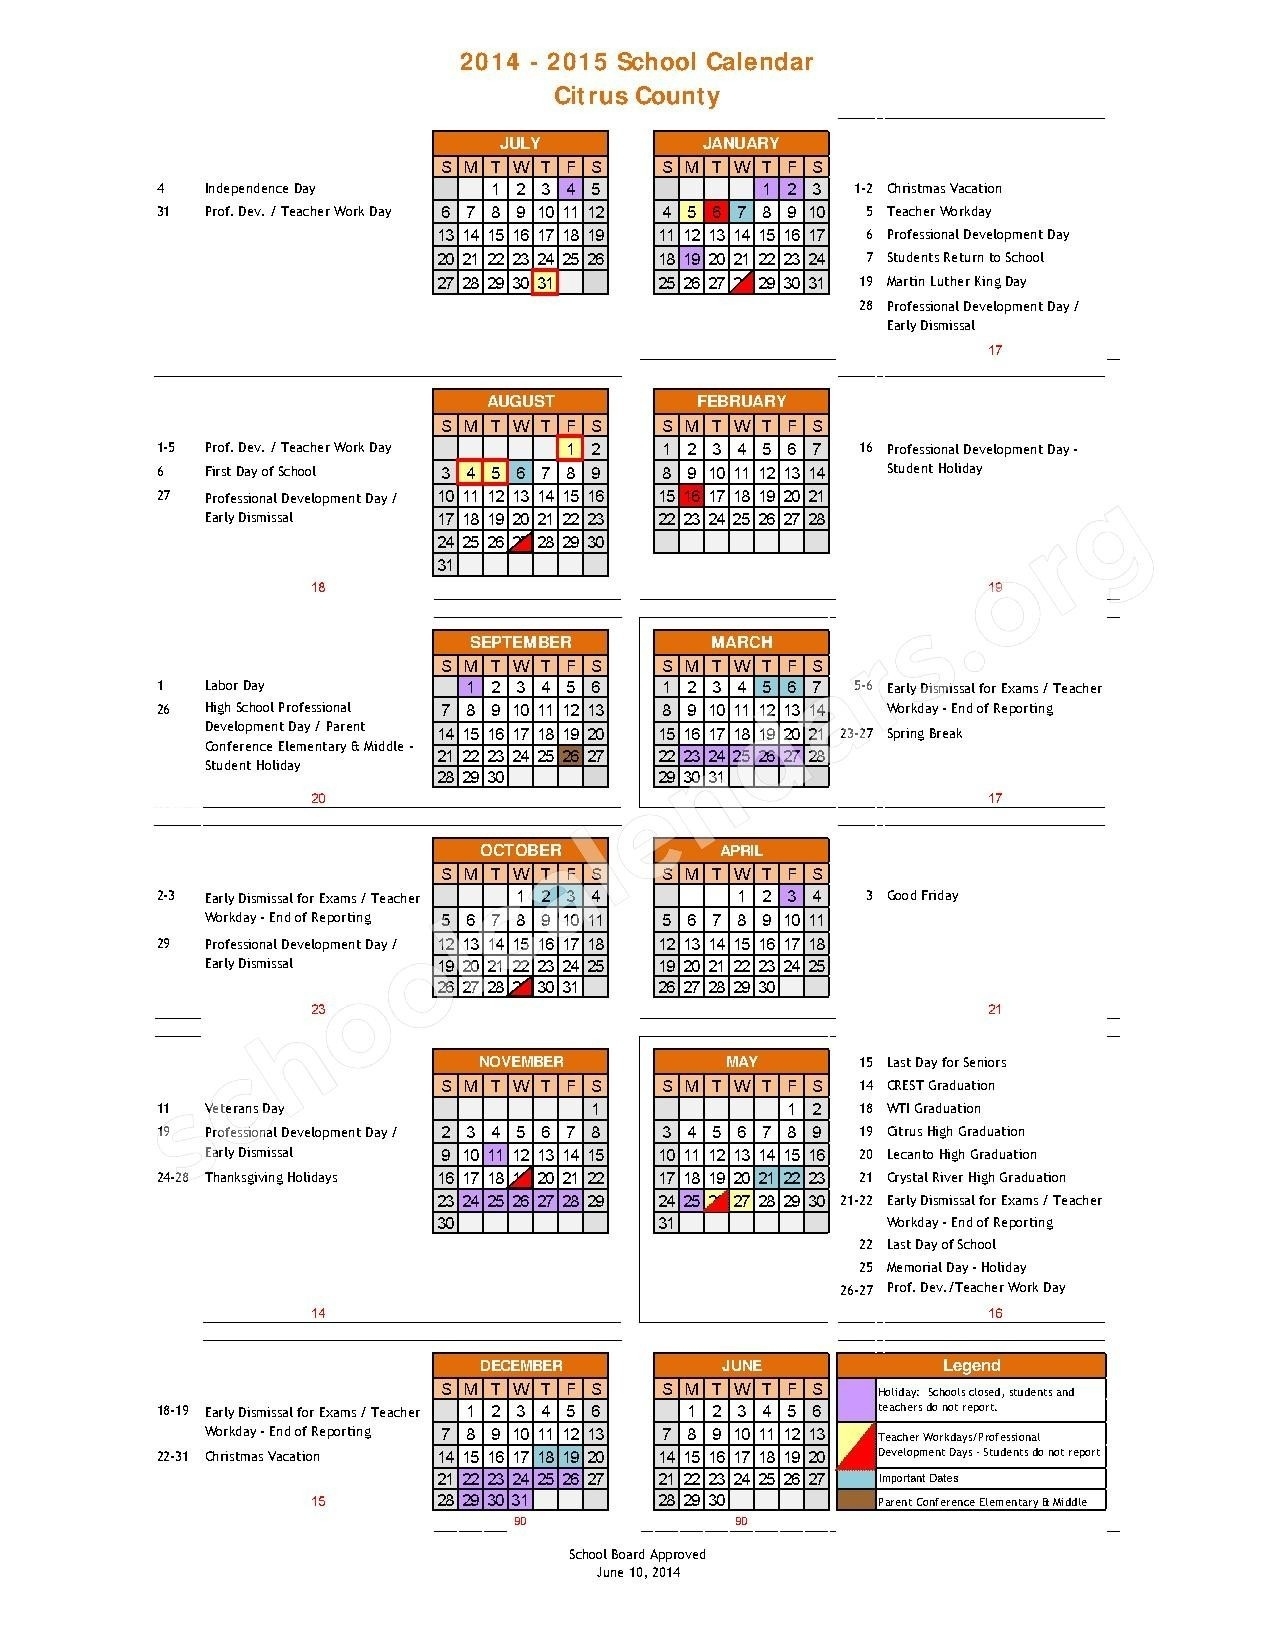 Citrus County School Calendar | Nicegalleries Dashing School Calendar Citrus County